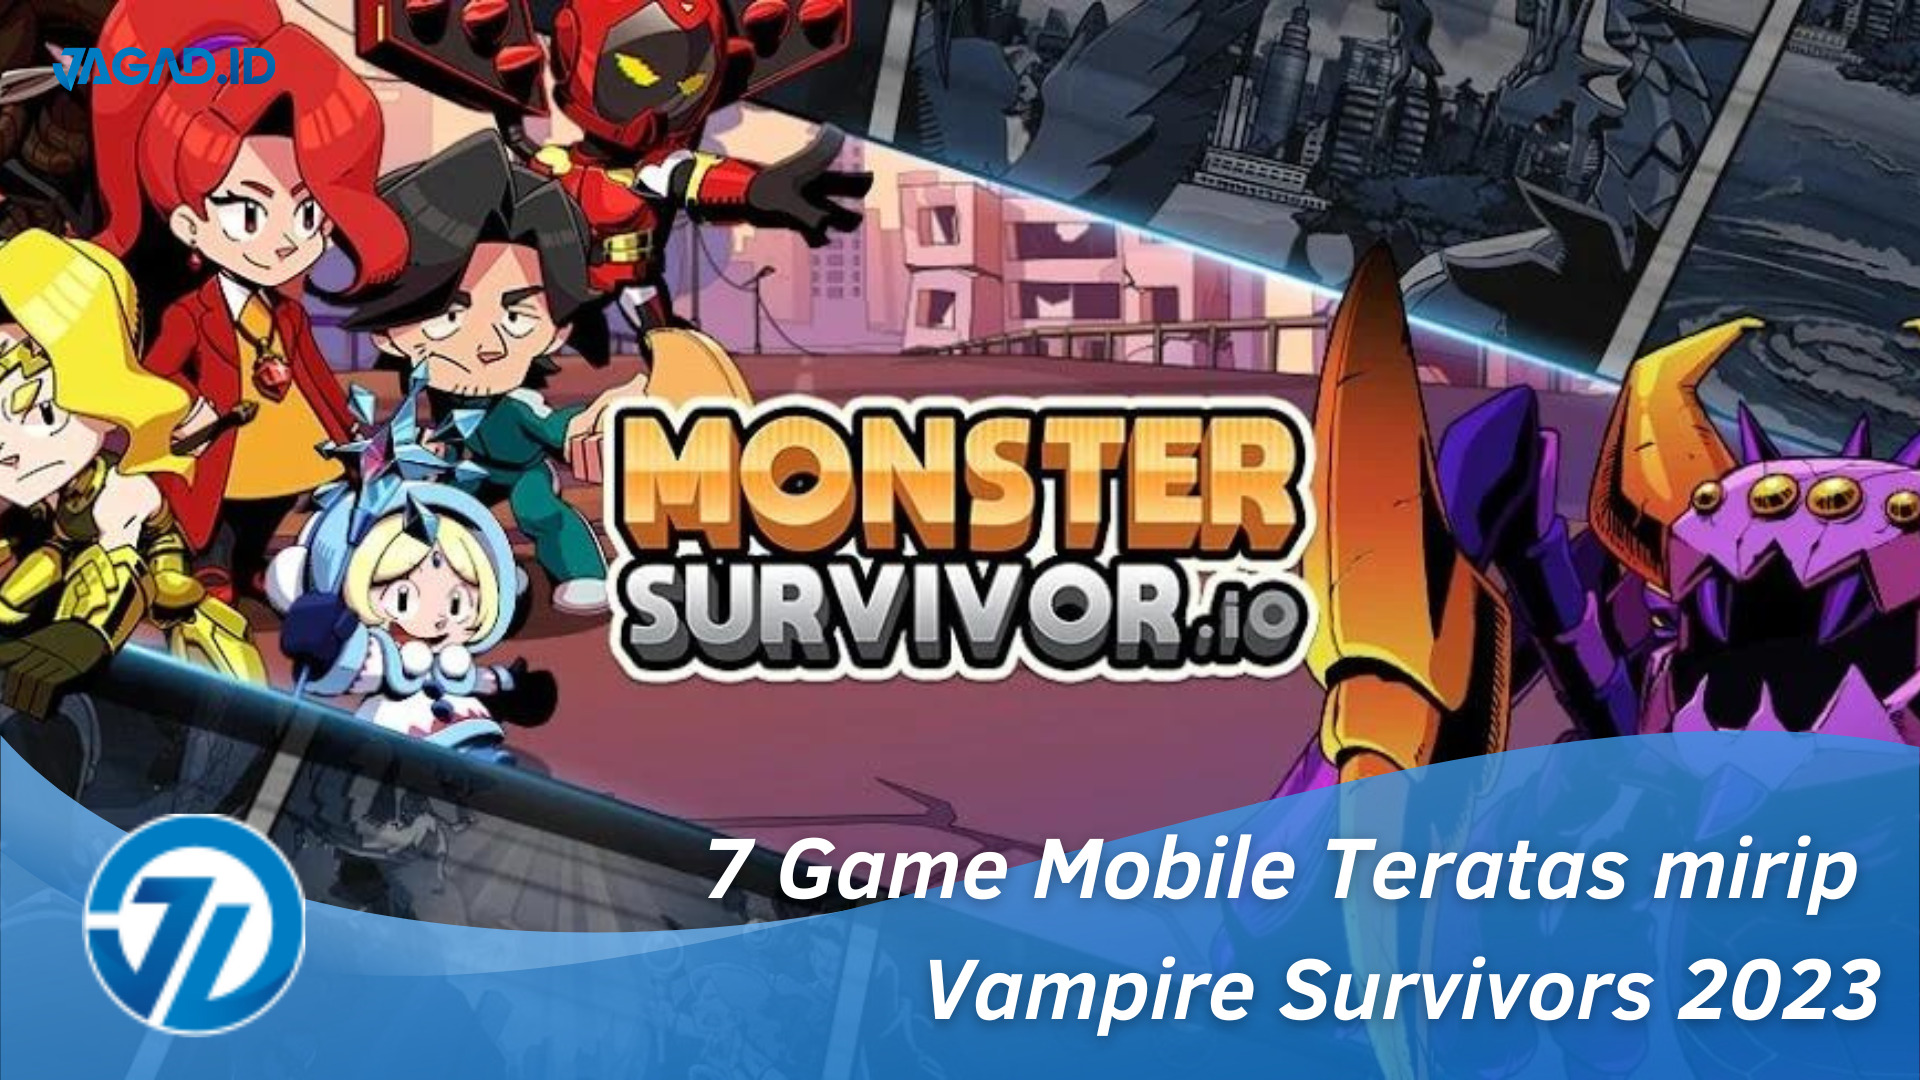 7 Game Mobile Teratas mirip Vampire Survivors 2023